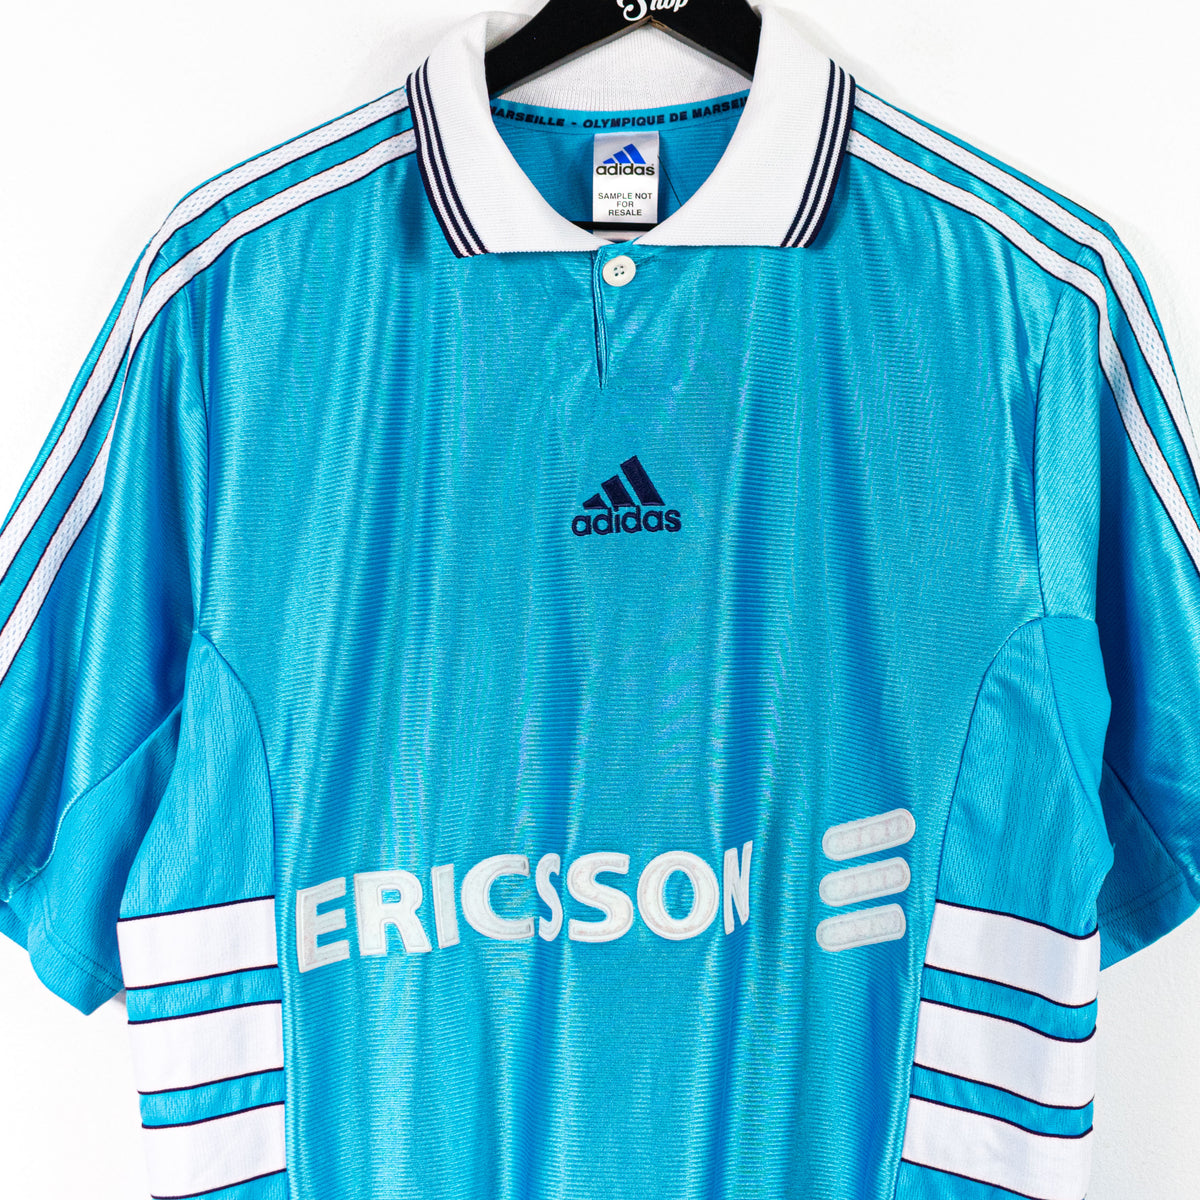 Retro Marseilles Jersey 1998/99 By Adidas